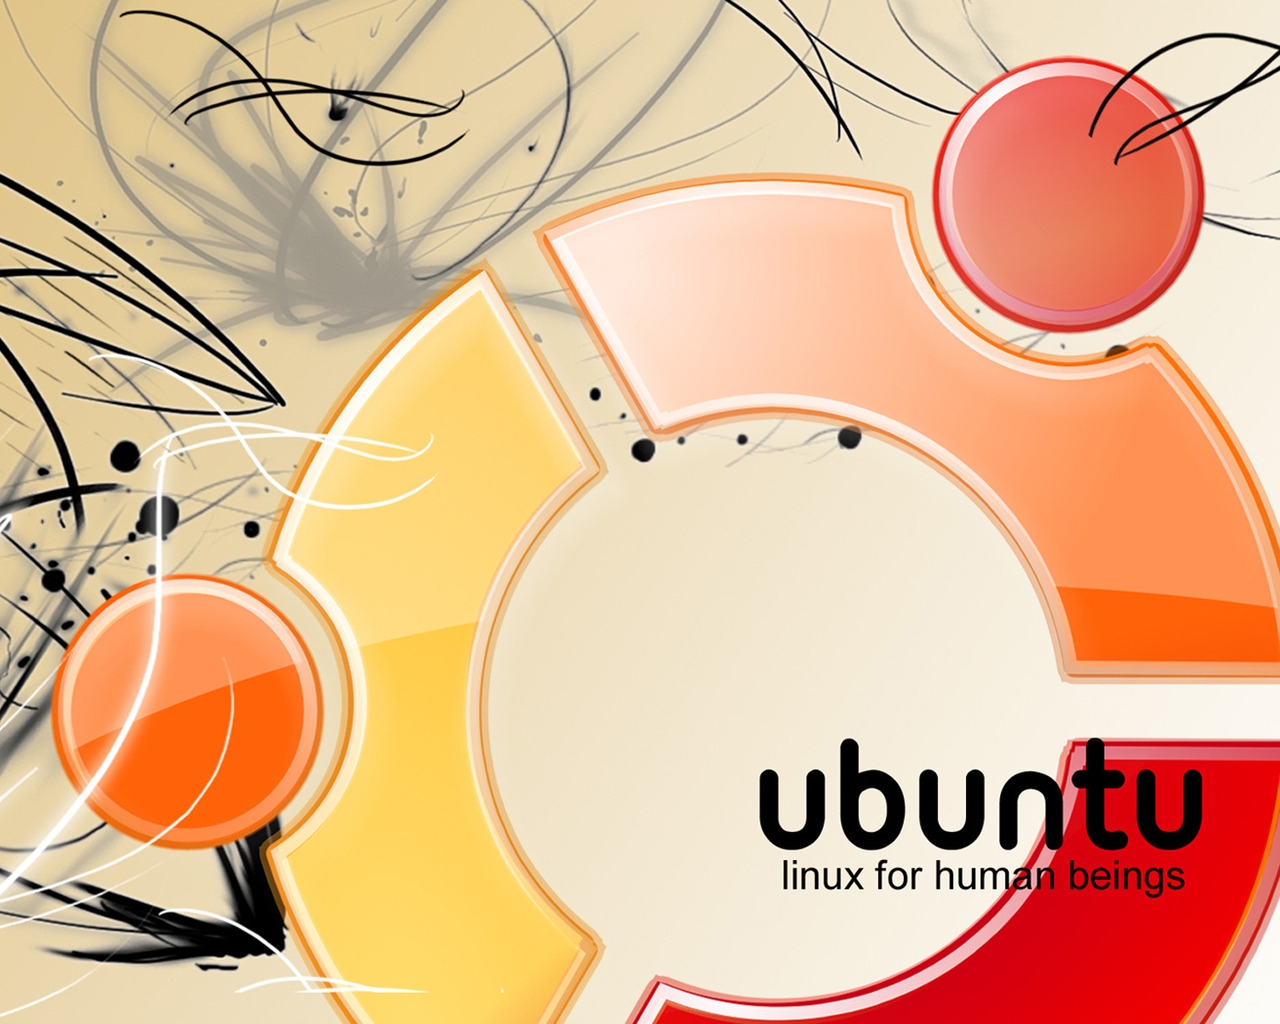 Ubuntu Linux for 1280 x 1024 resolution